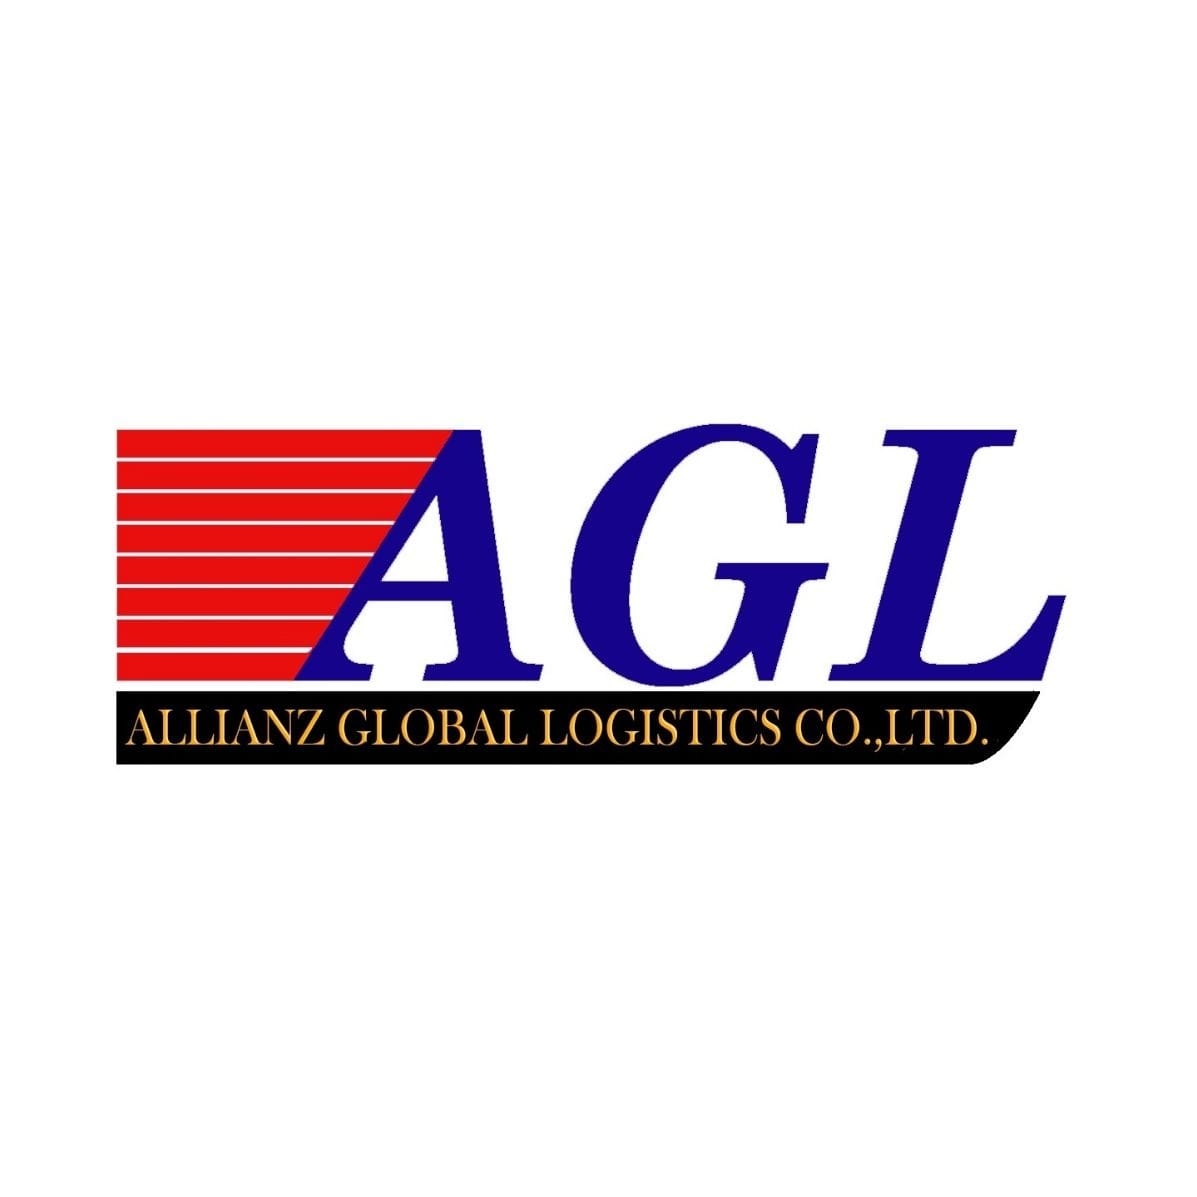 Allianz Global Logistics